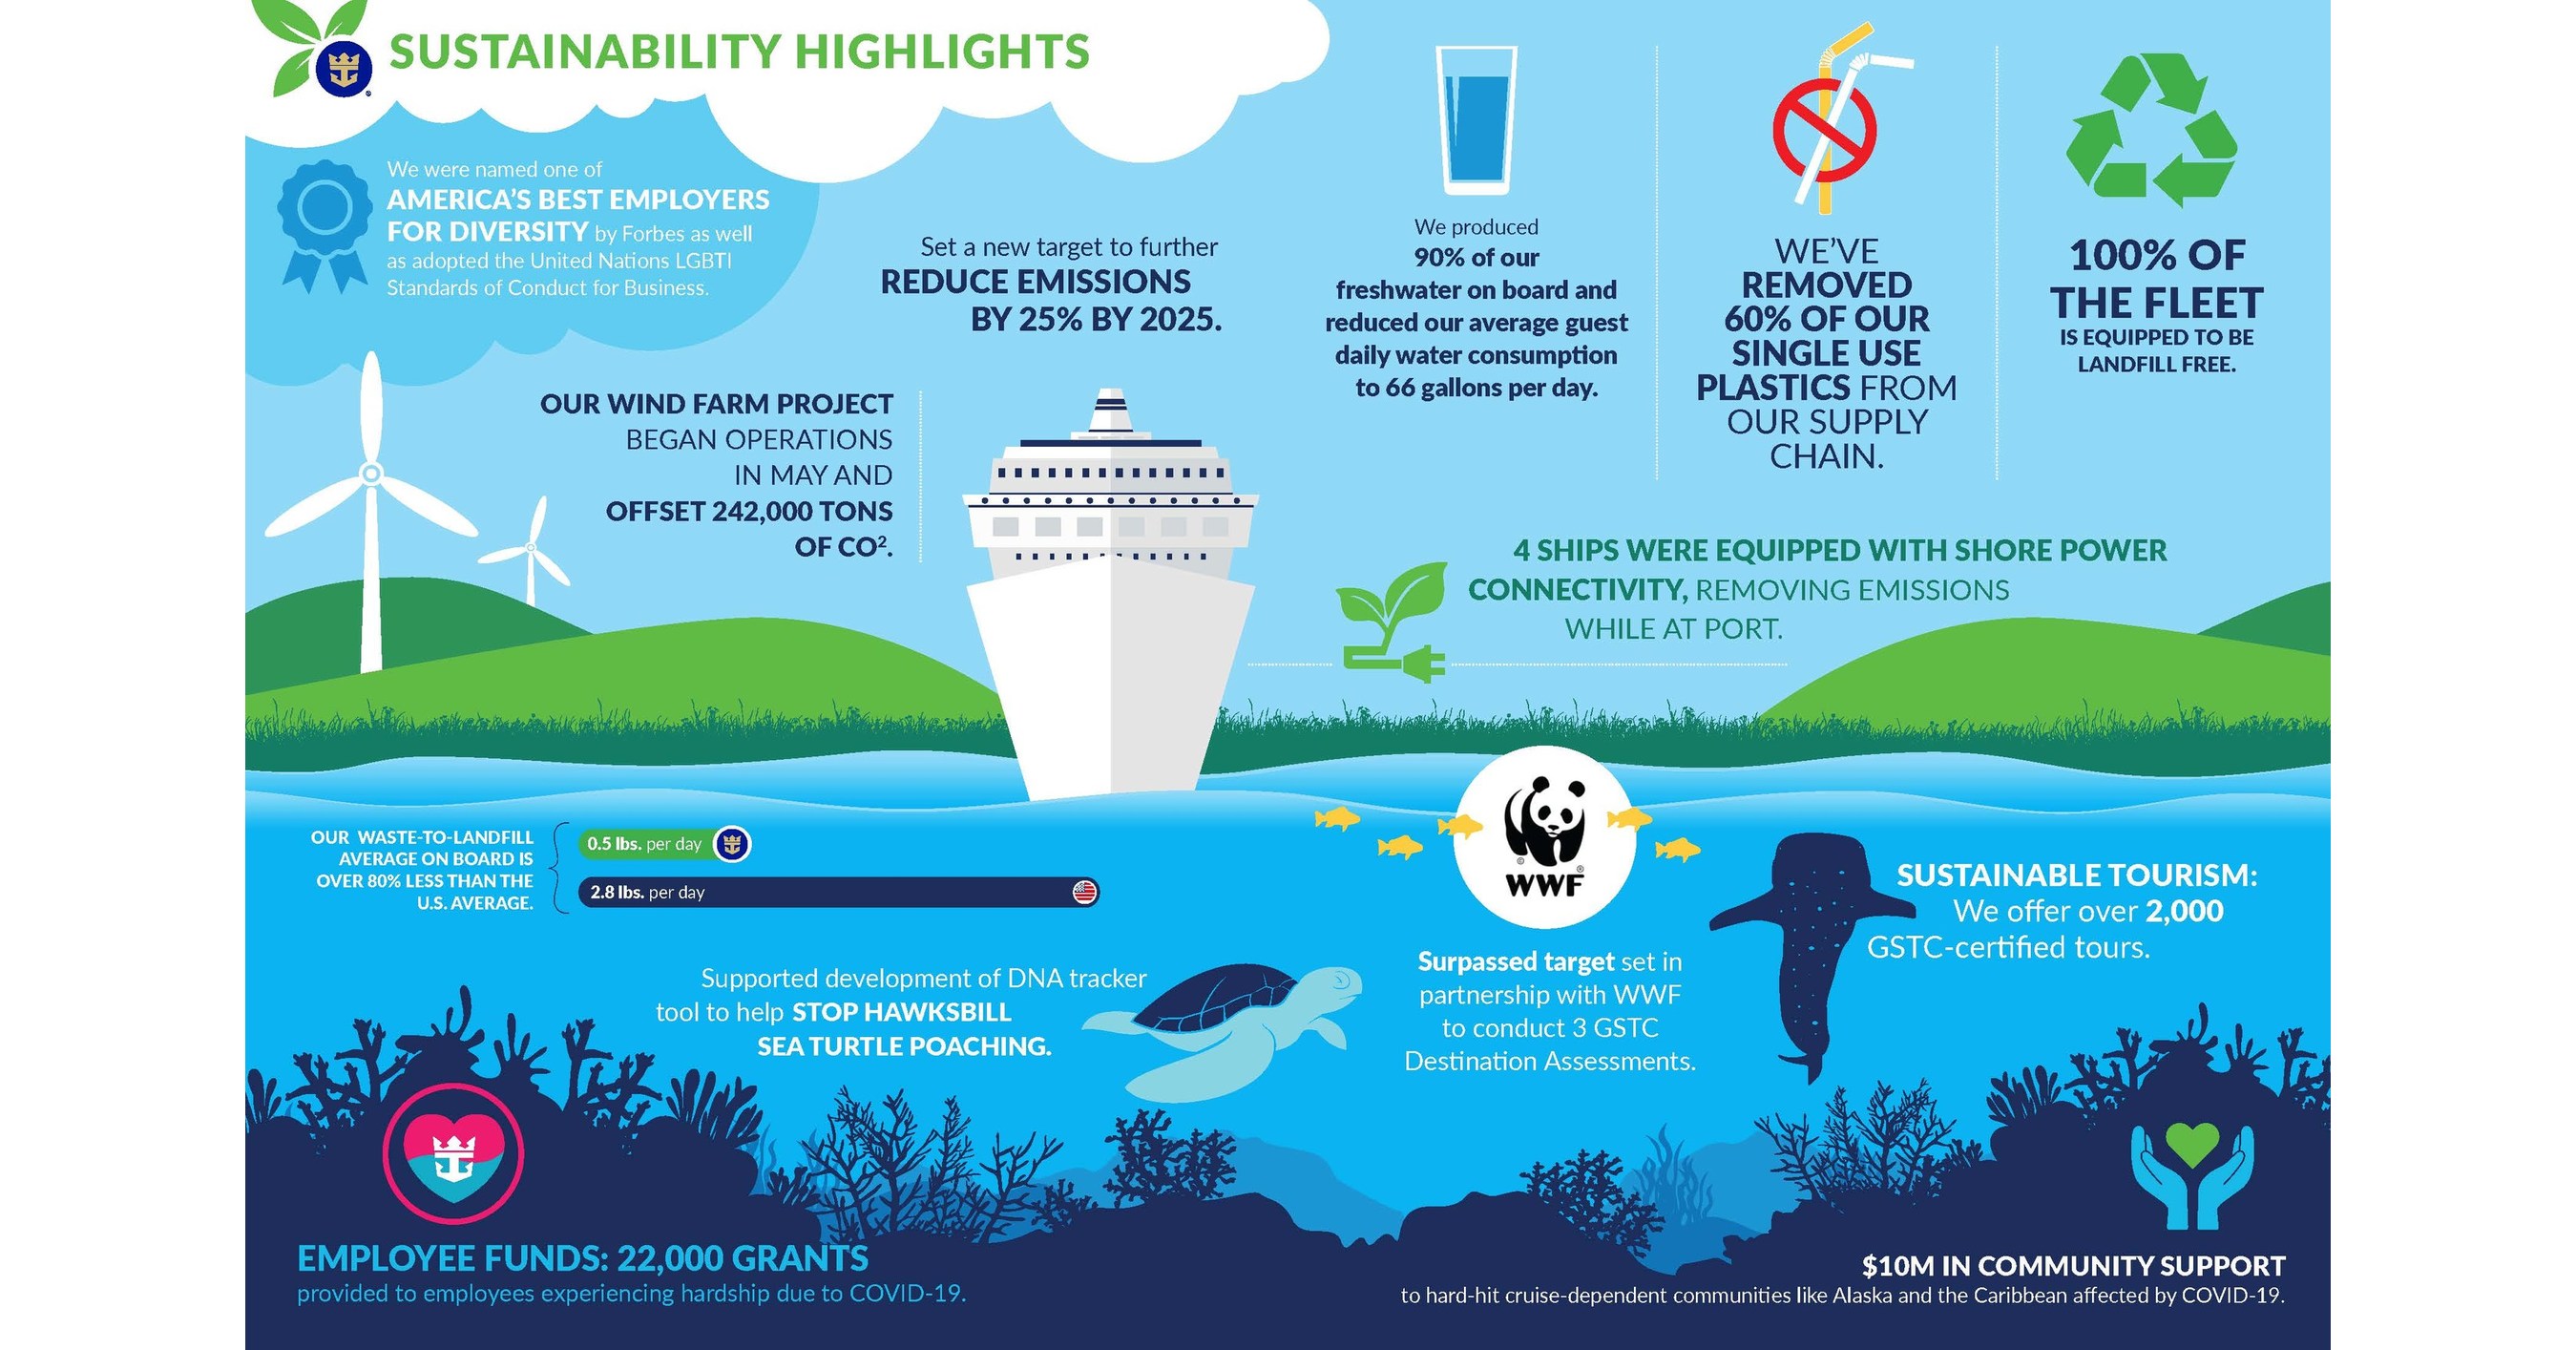 royal caribbean cruise sustainability report